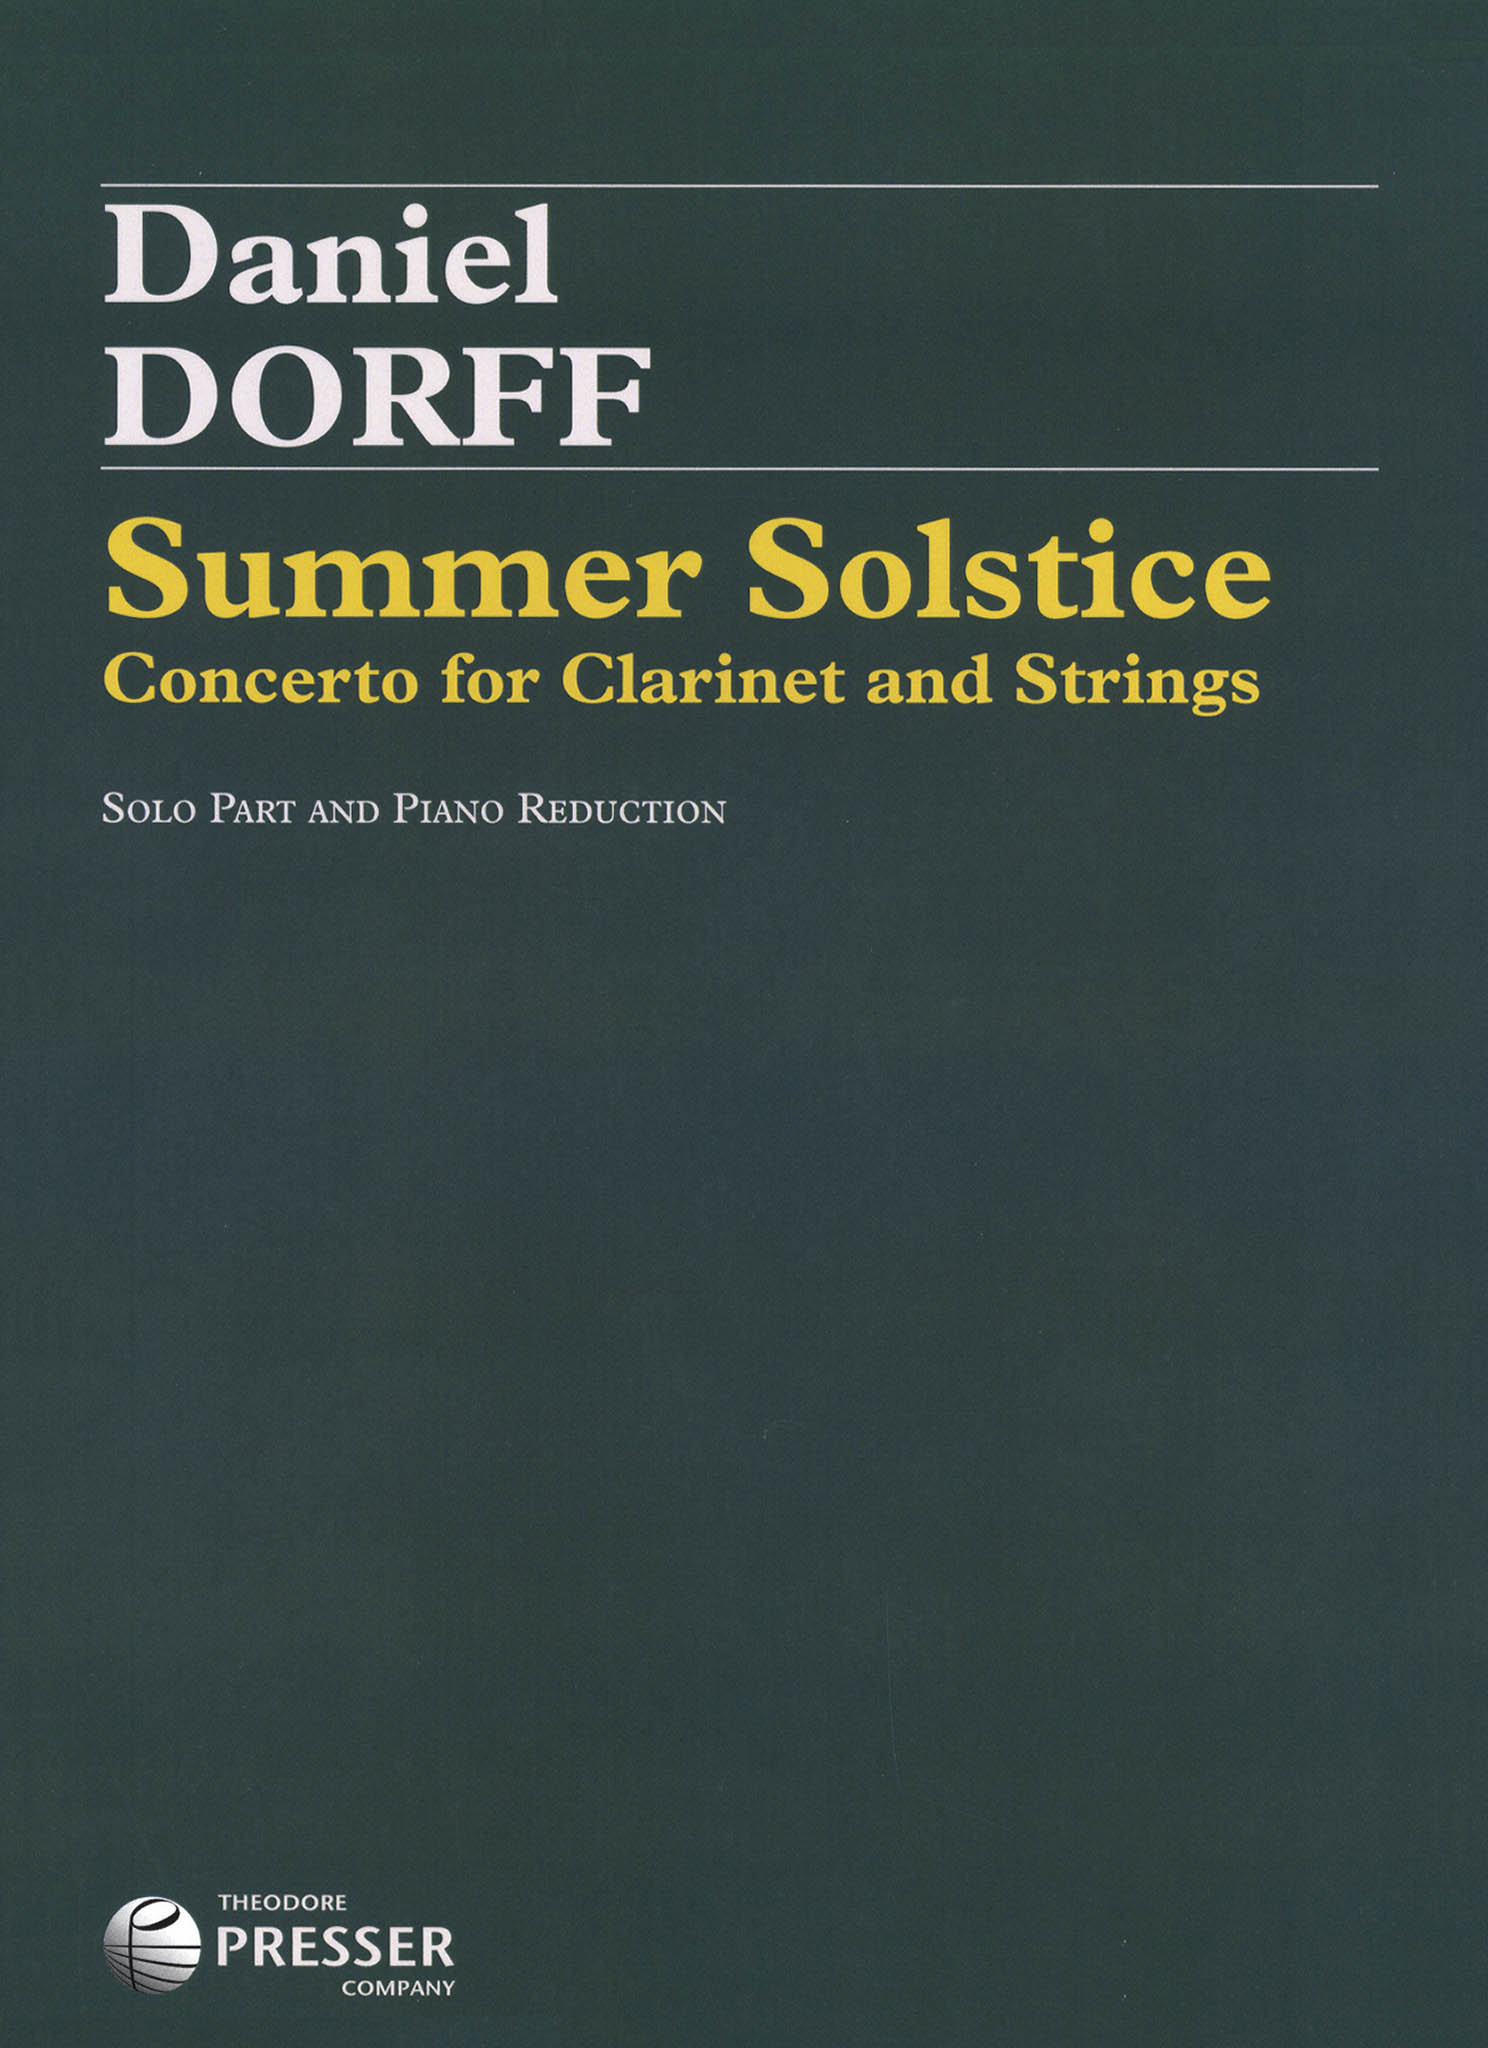 Dorff Summer Solstice clarinet concerto piano reduction cover